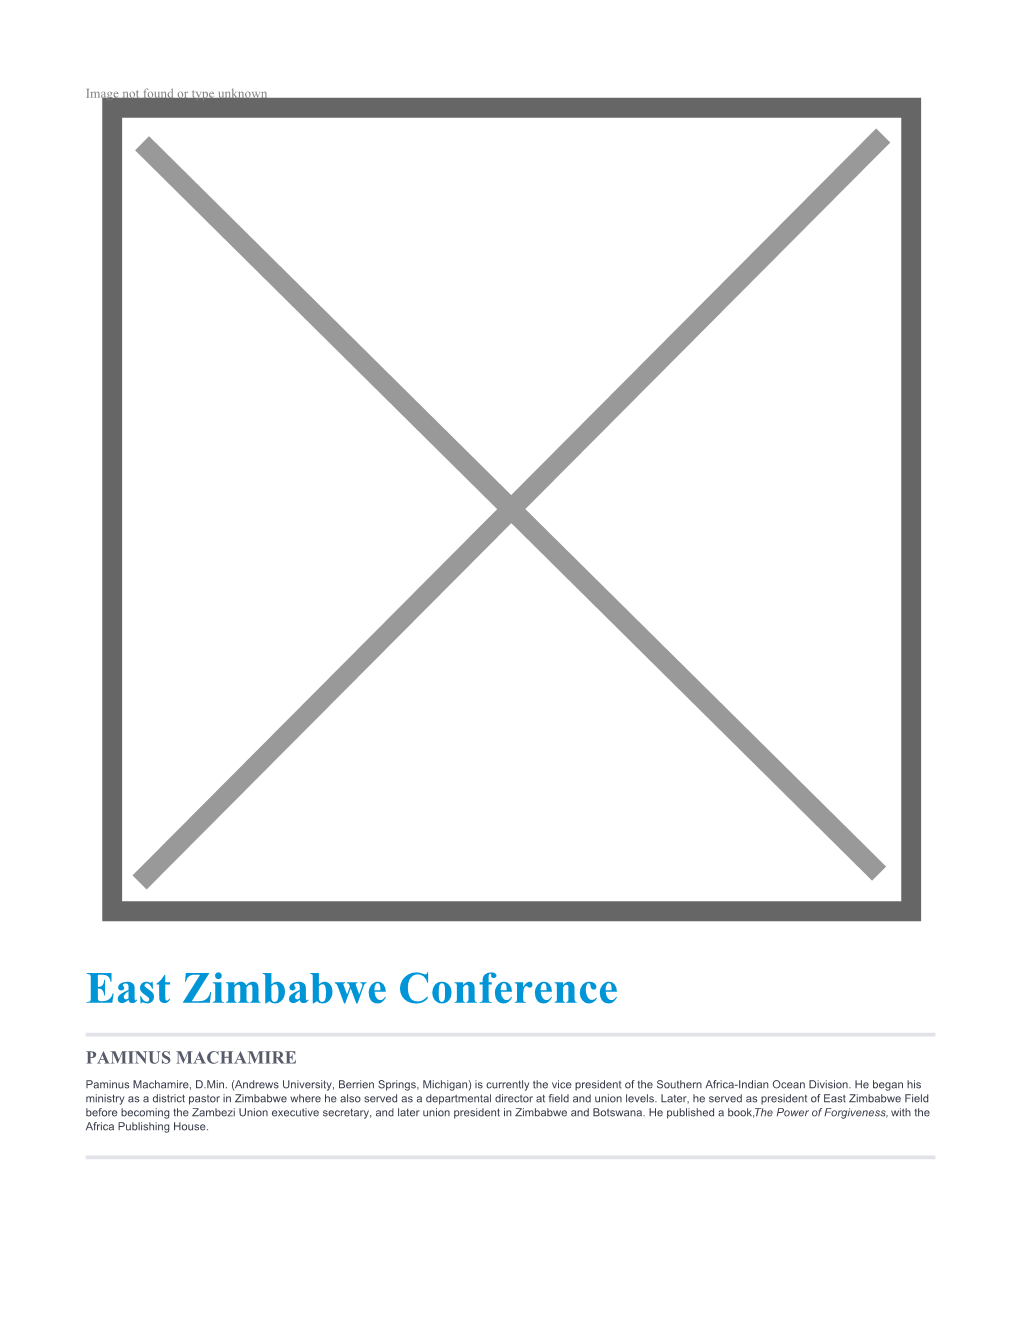 East Zimbabwe Conference